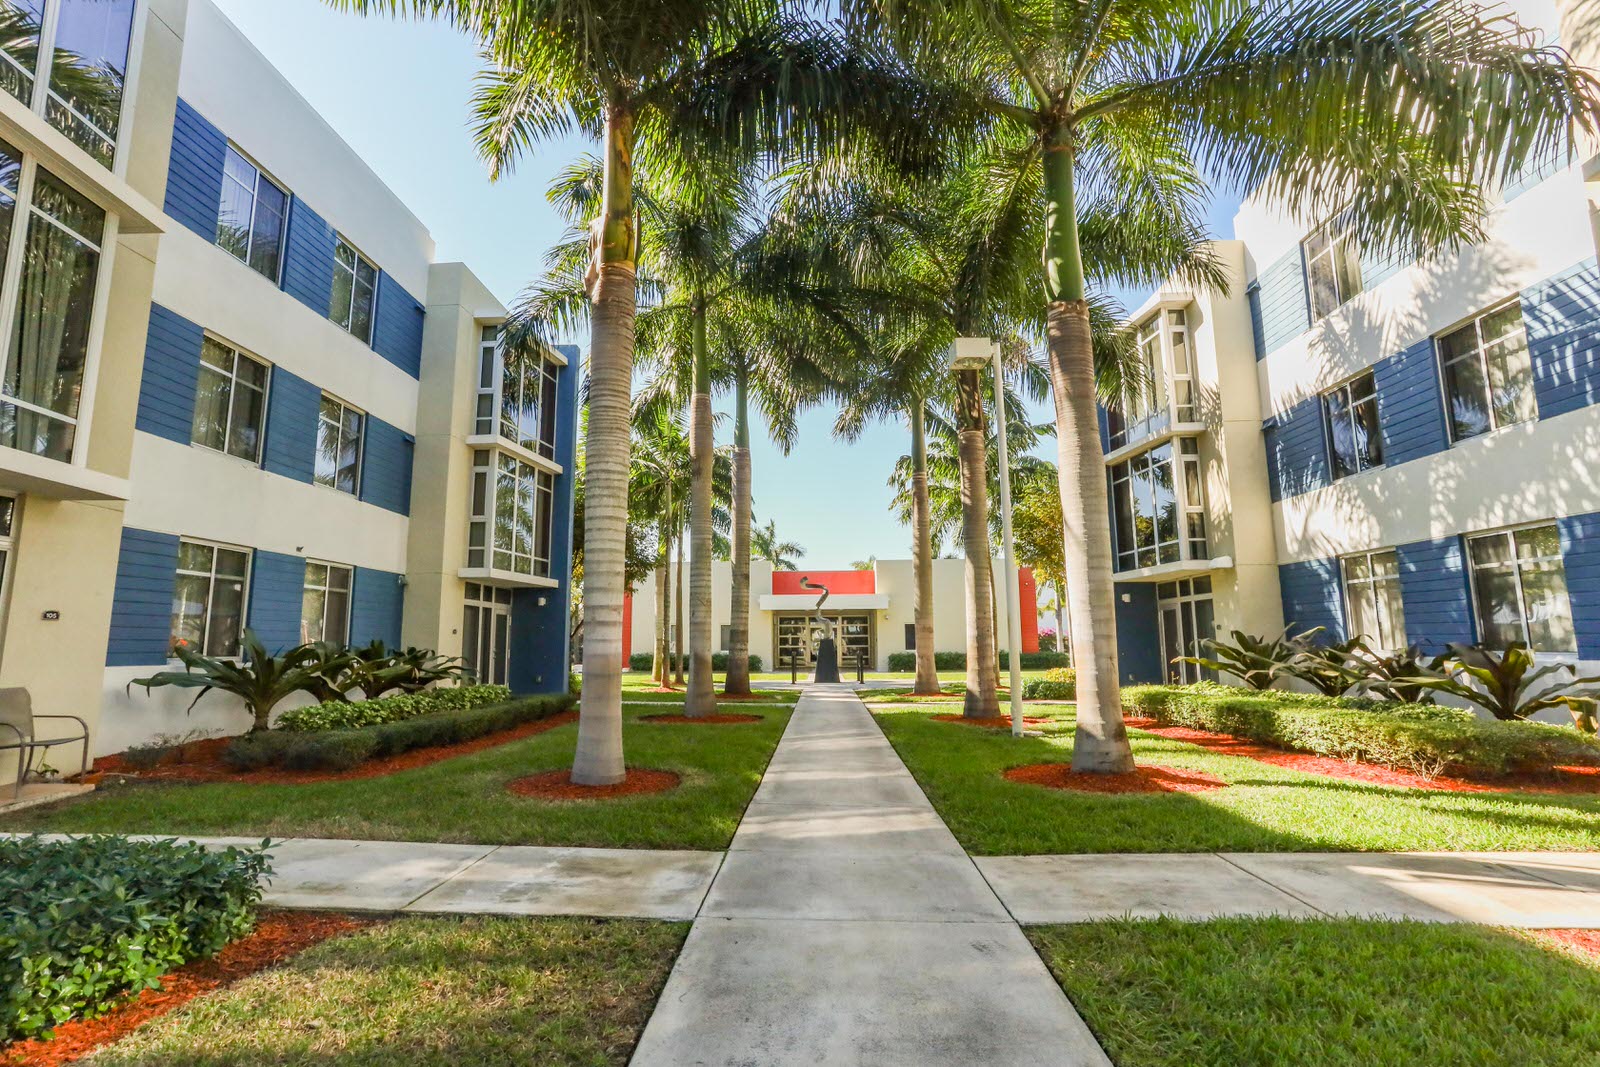 King’s Terrace Apartments PMI Florida Professional